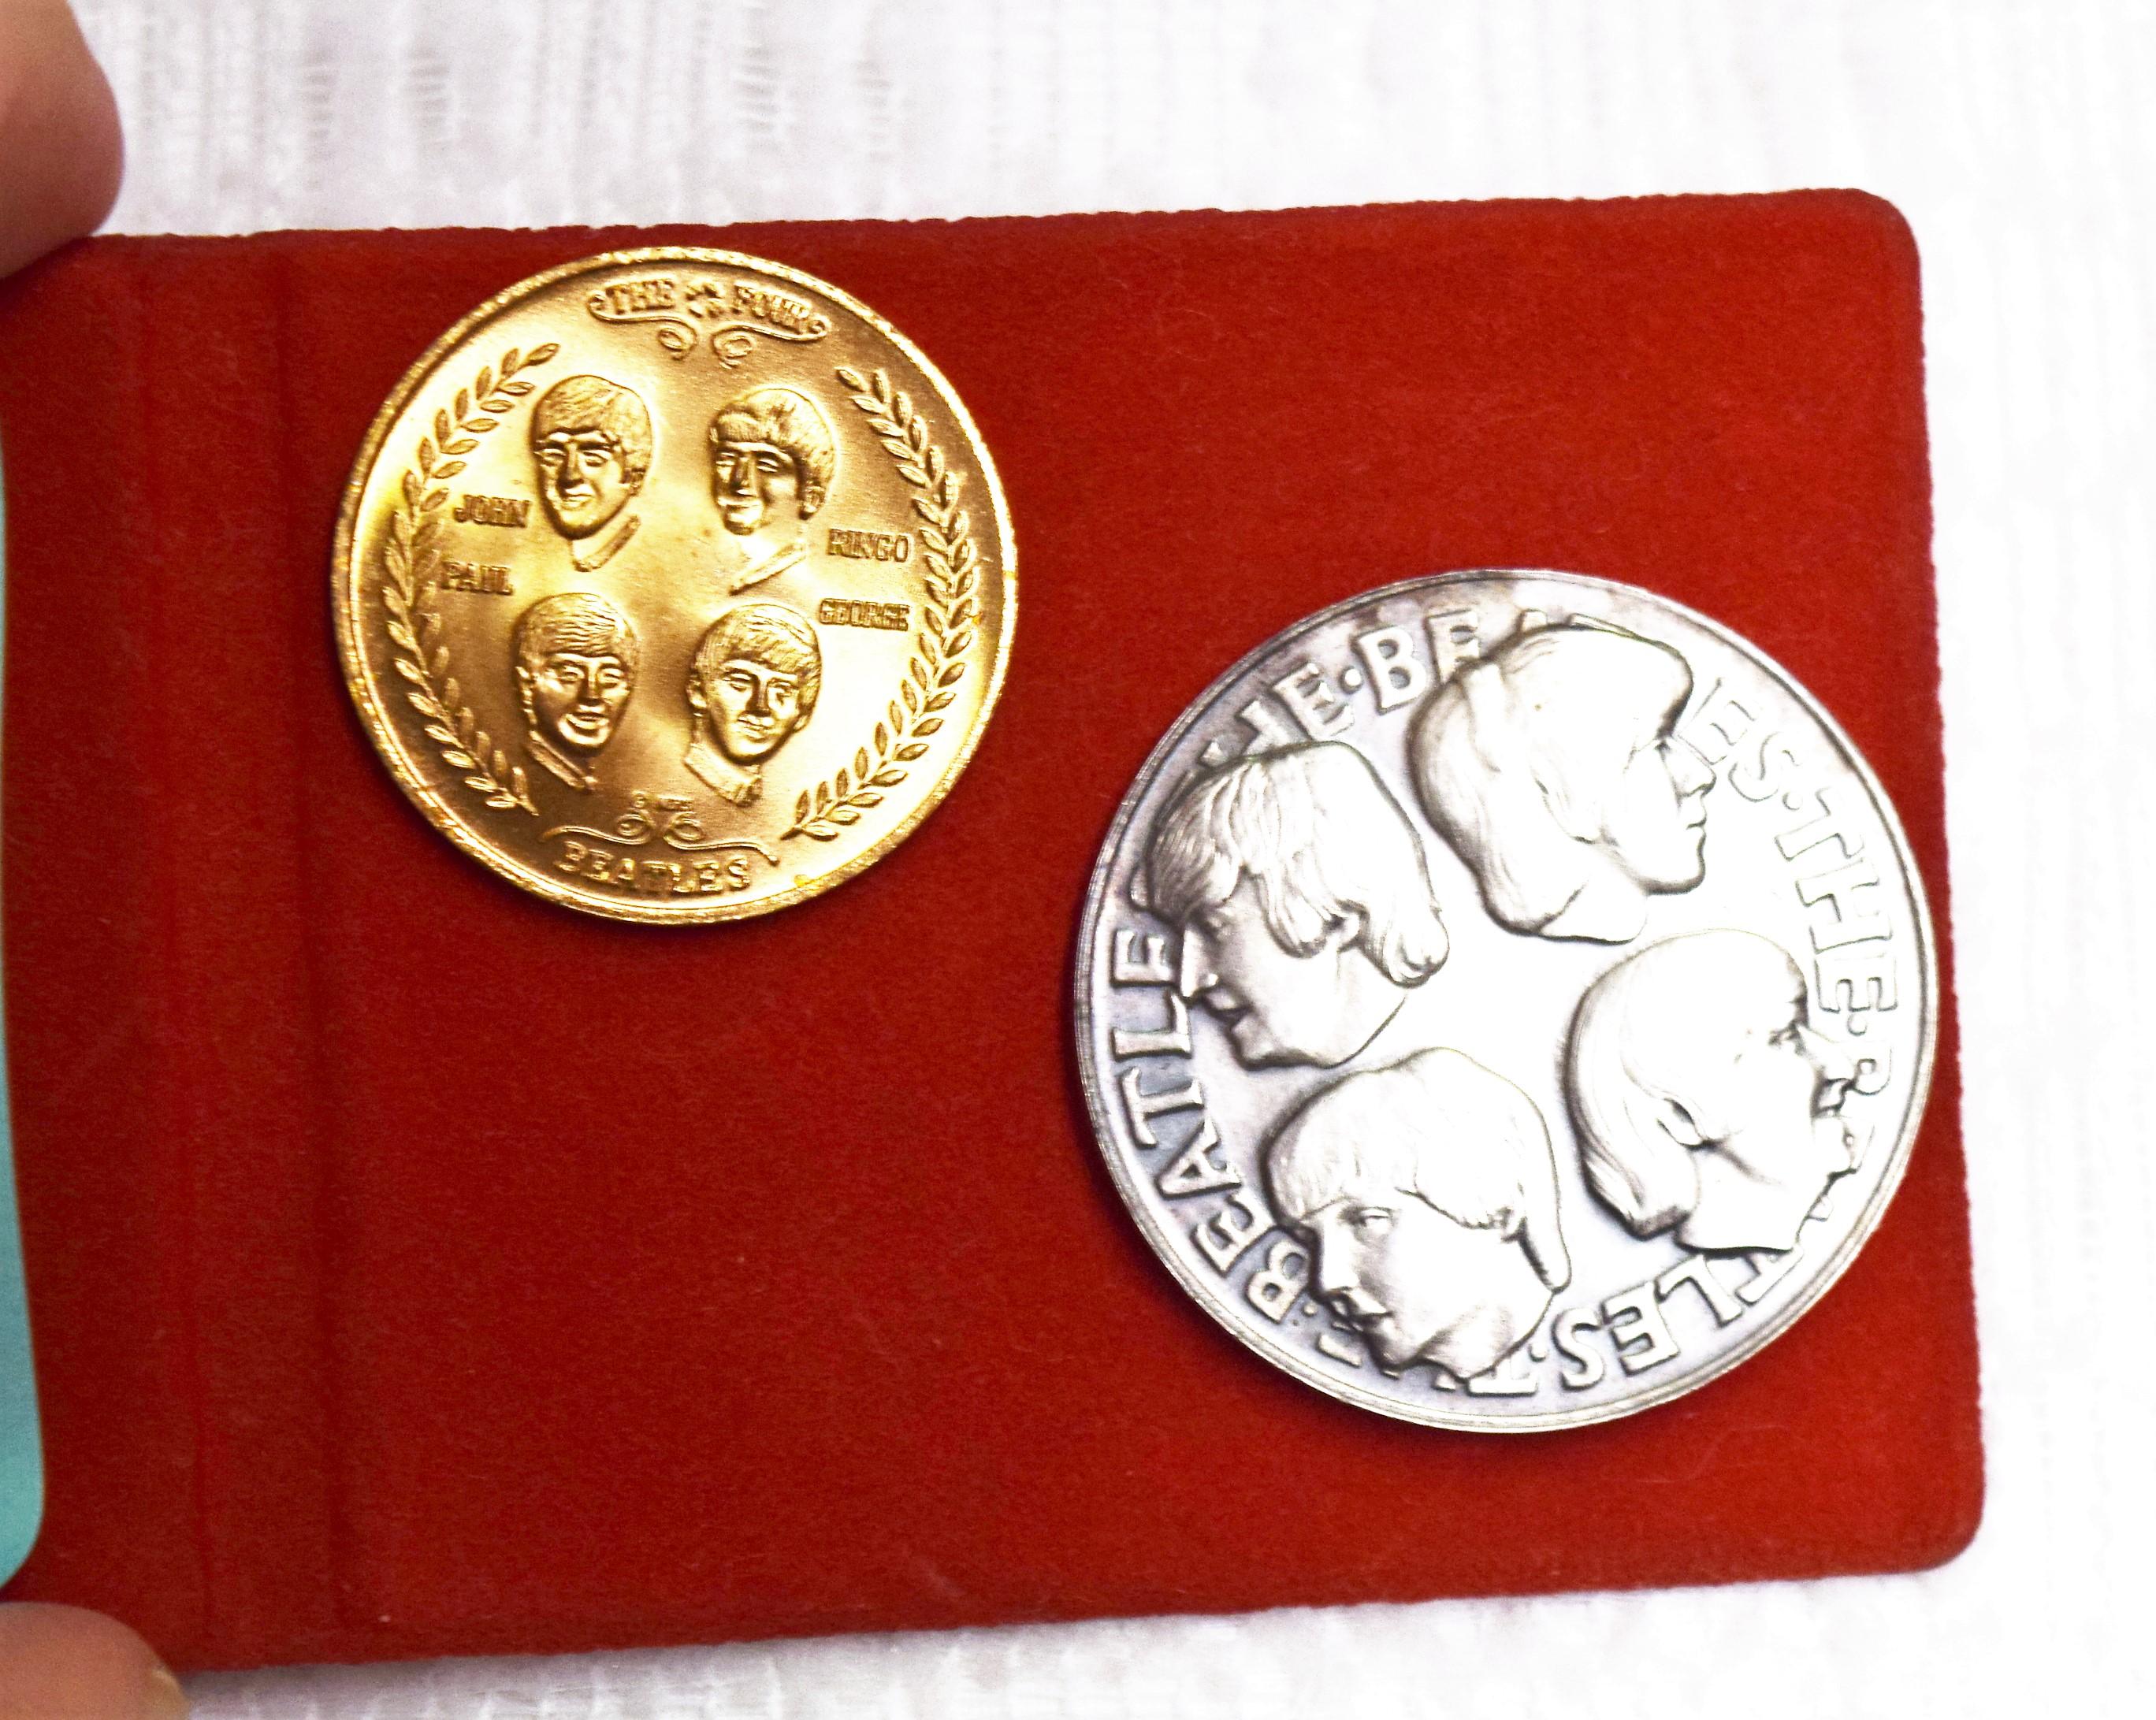 Beatles Commemorative Coins